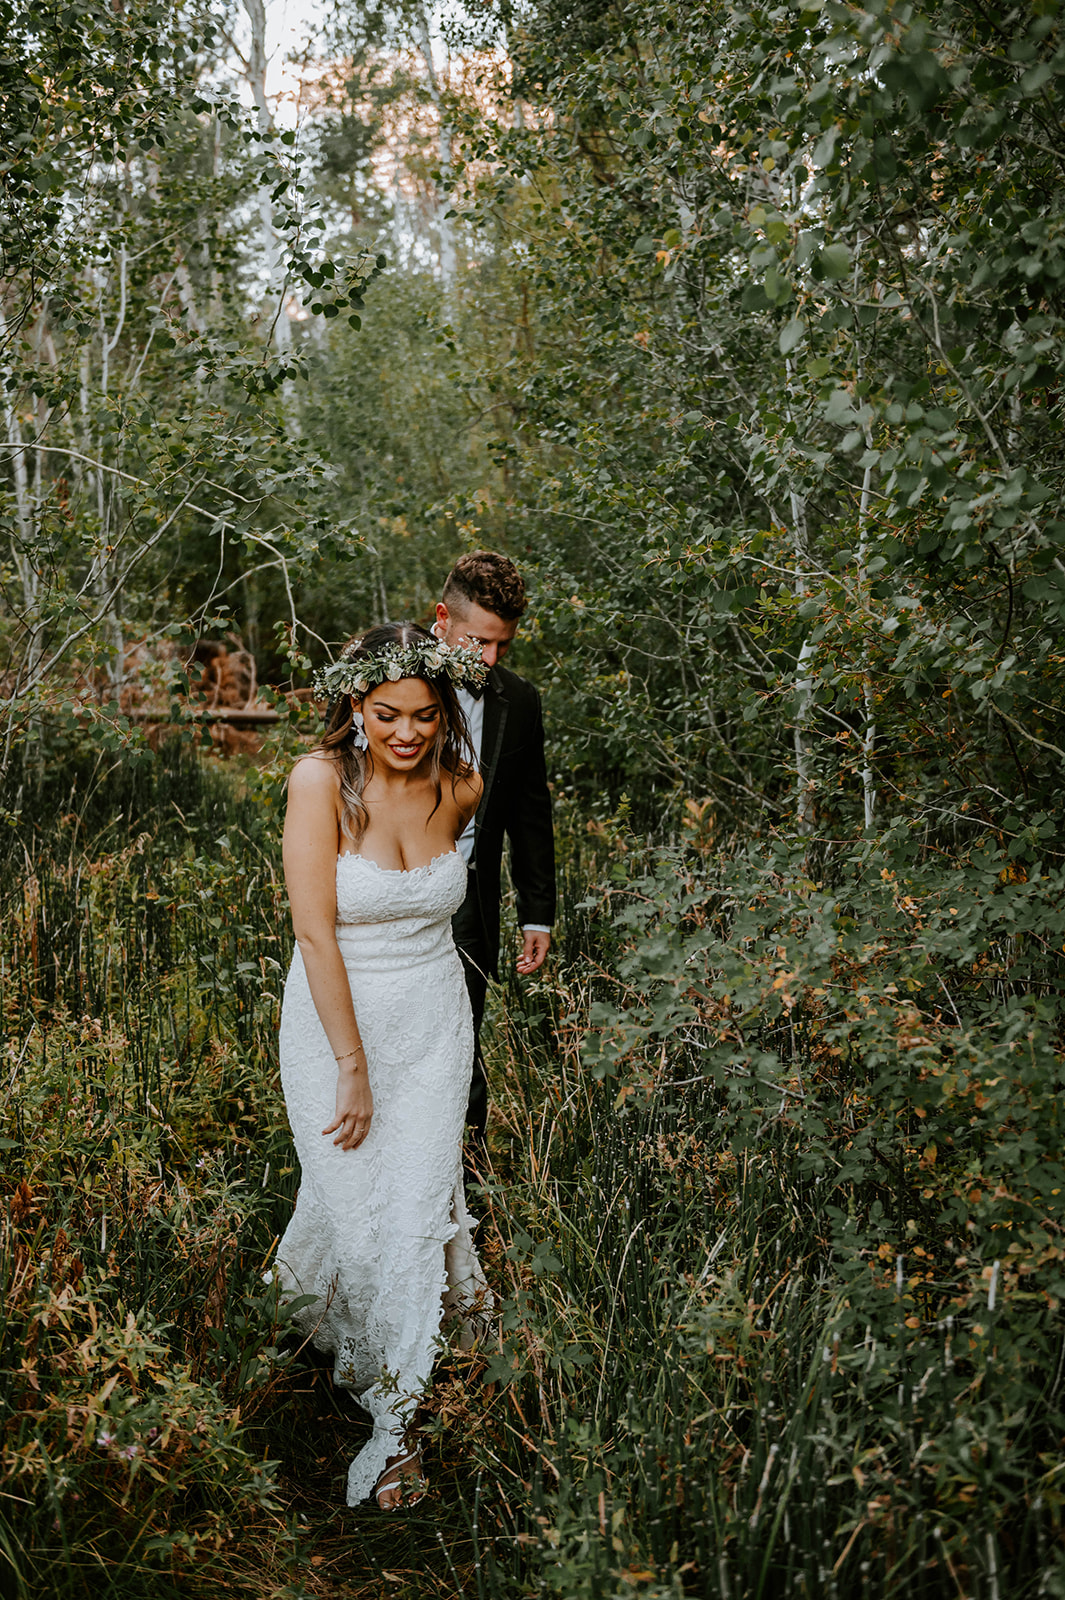 Bride leading groom through the aspen trees at shevlin park